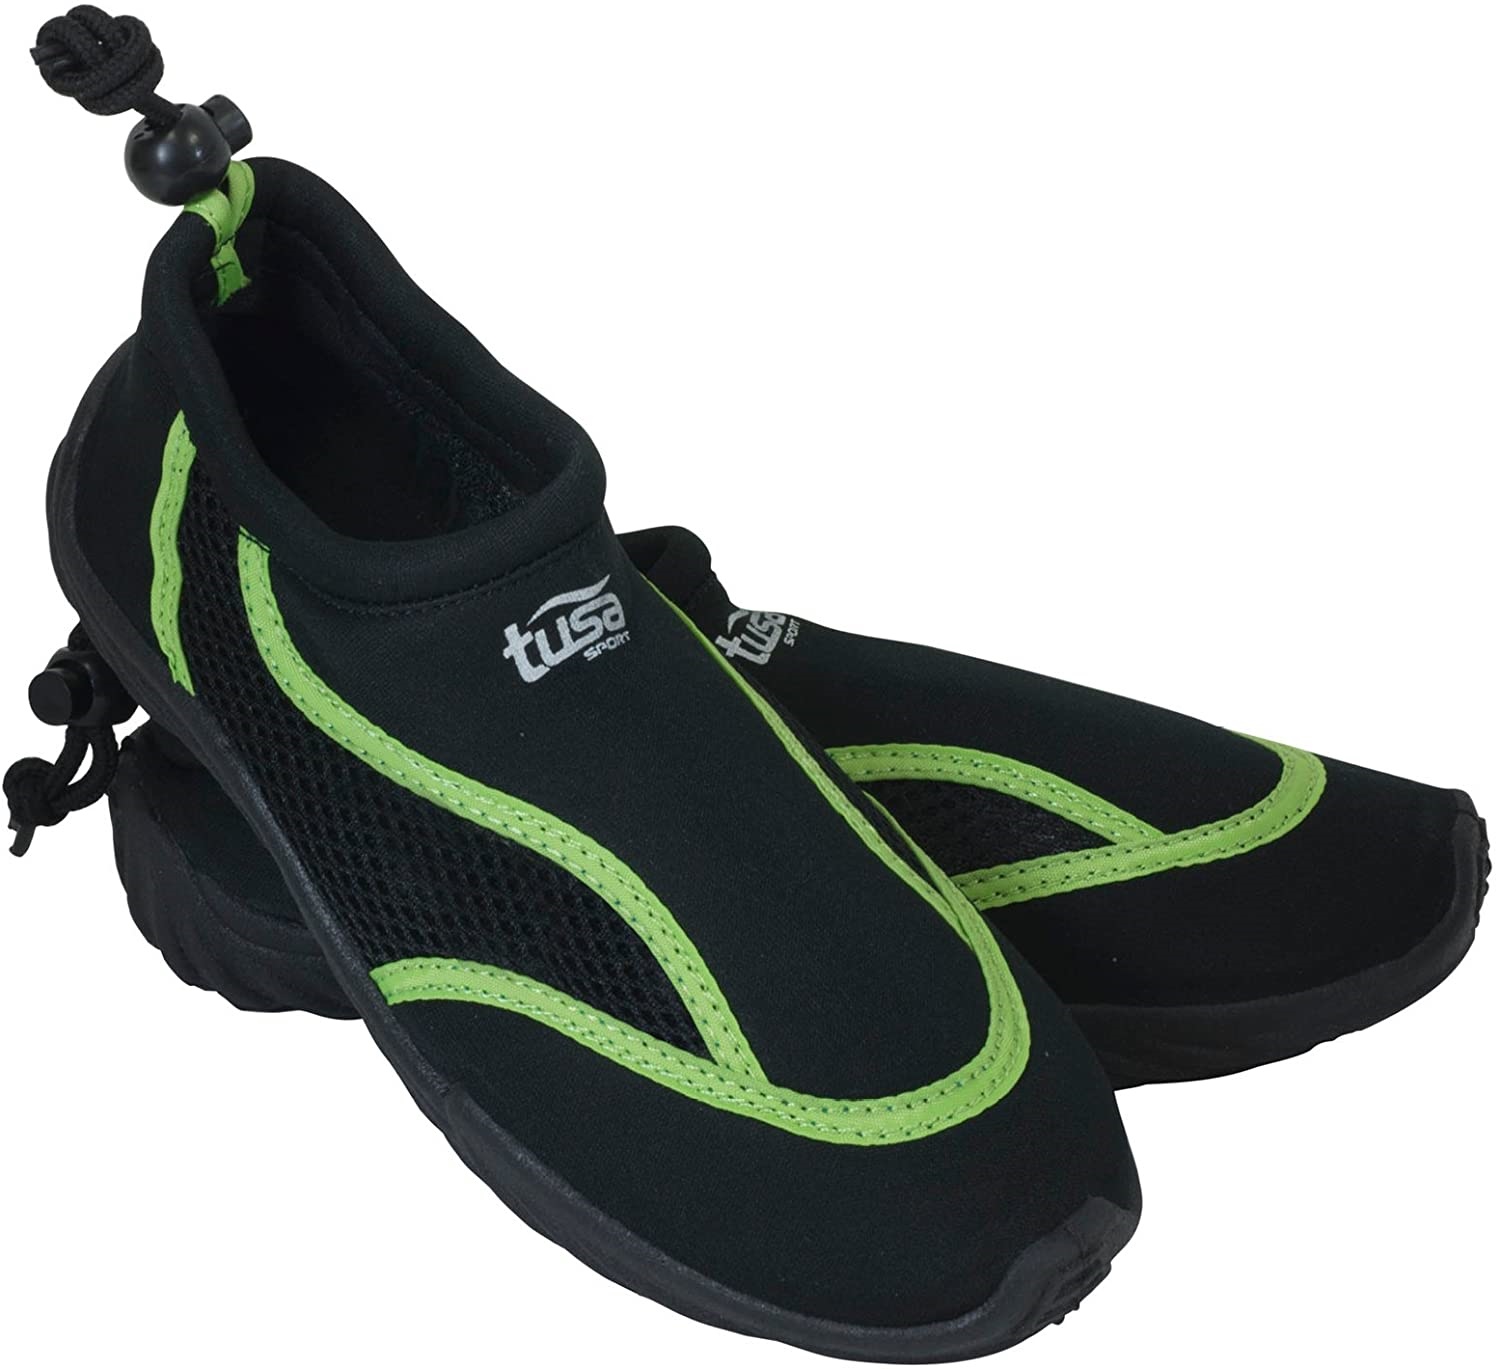 TUSA Sport Aqua Shoe - Size EU 37